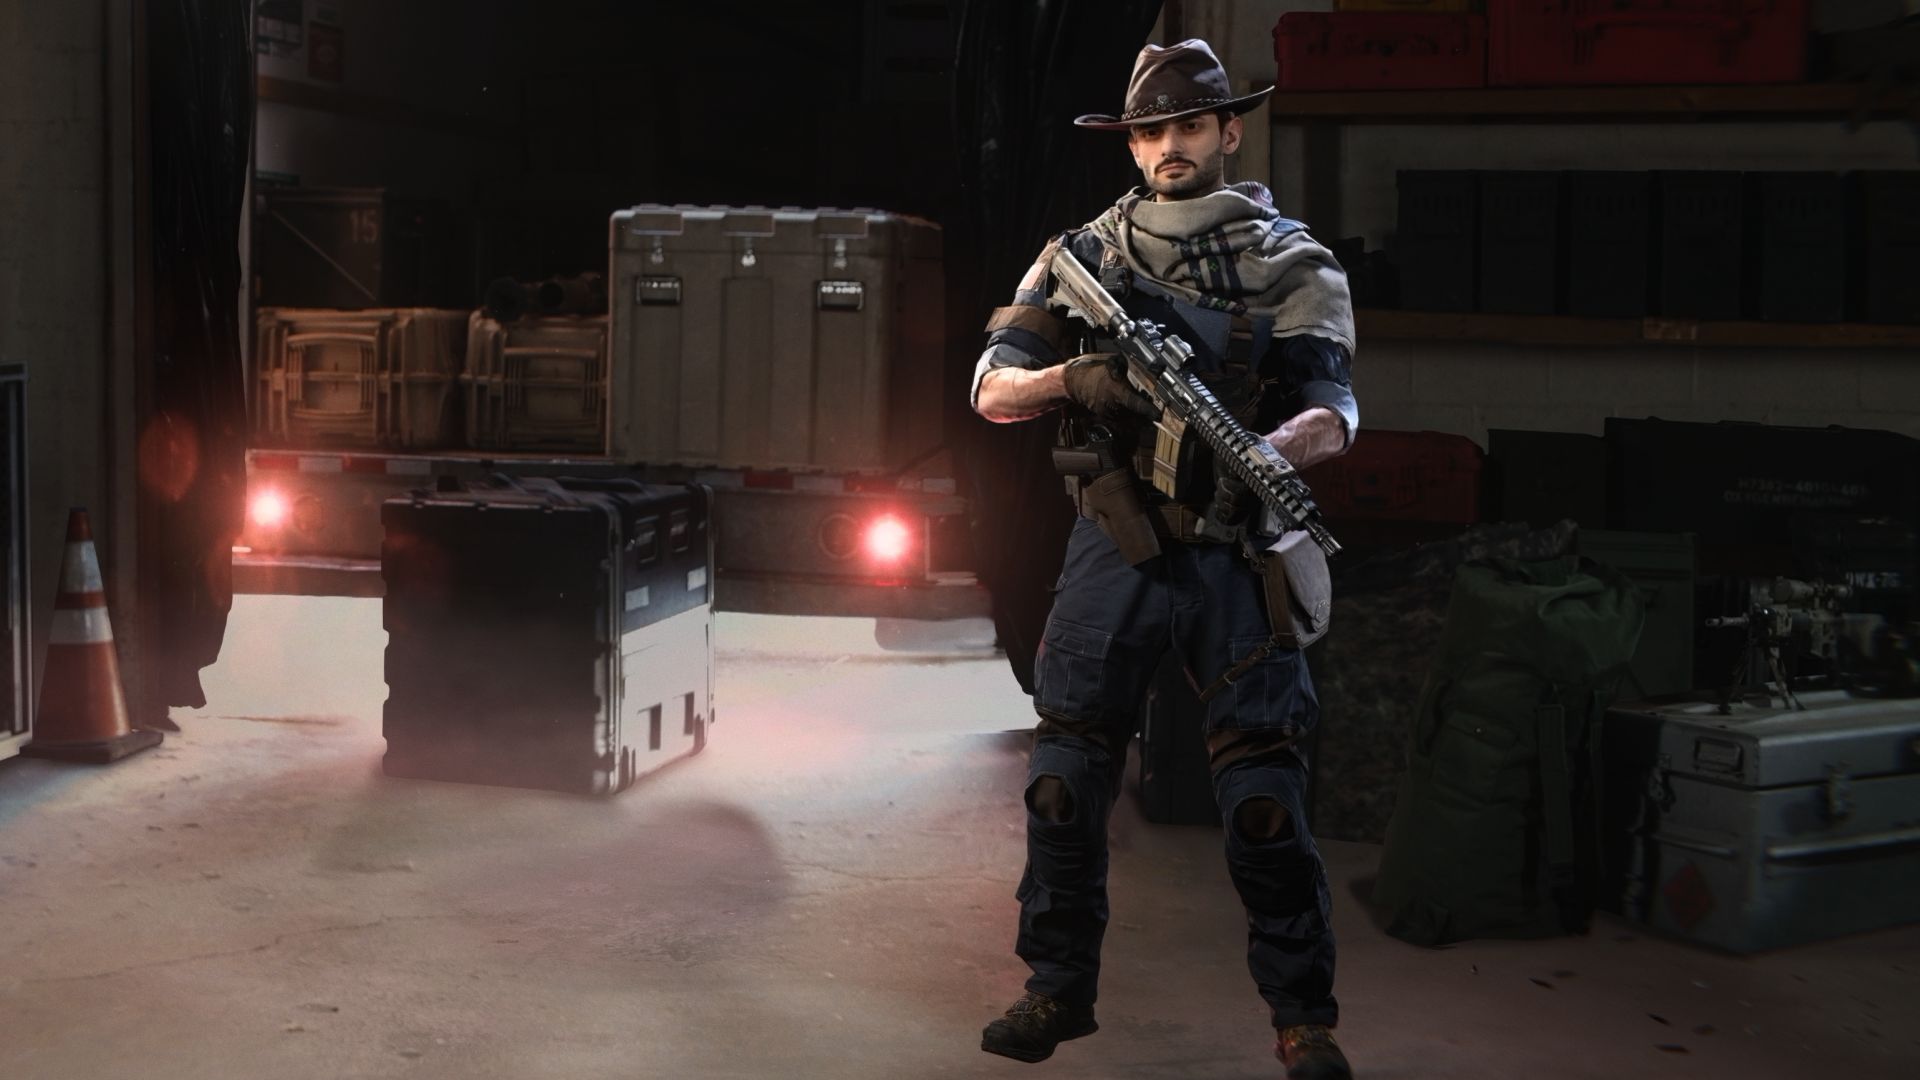 CoD: Modern Warfare operator Morte arrives this week, played by artist